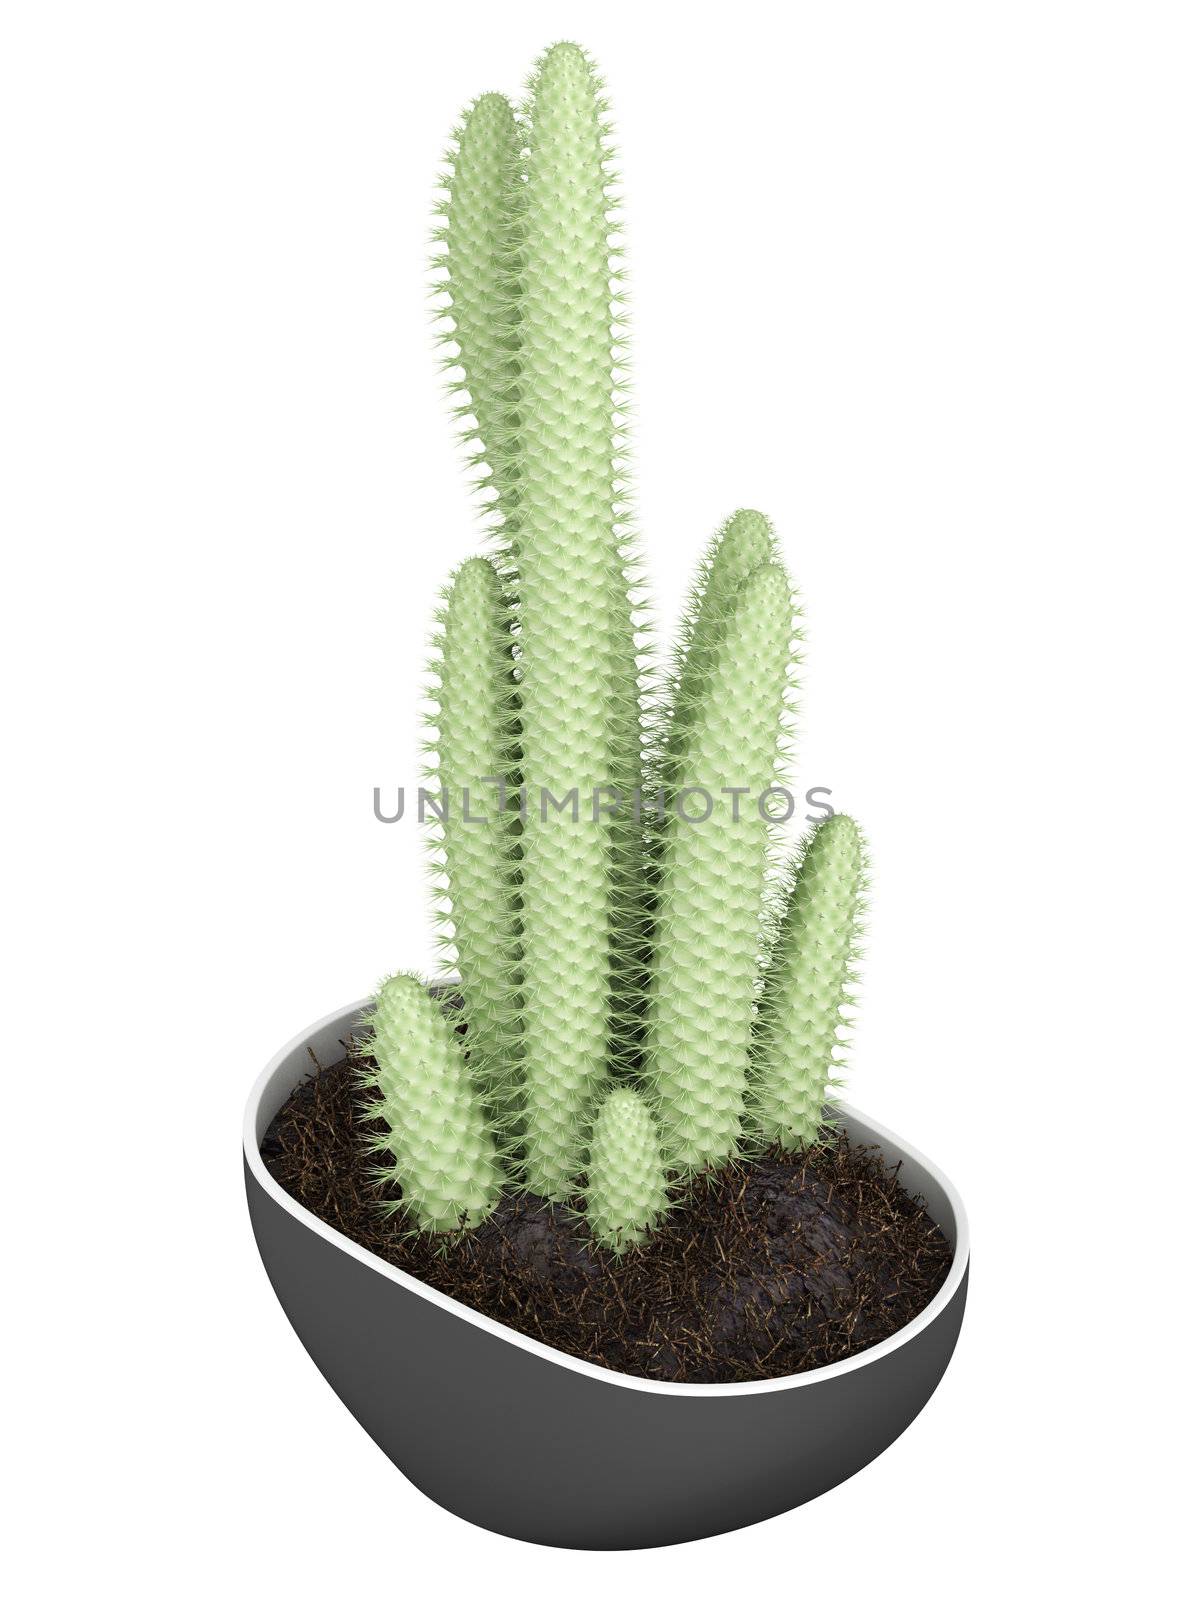 Cactus in a pot by AlexanderMorozov